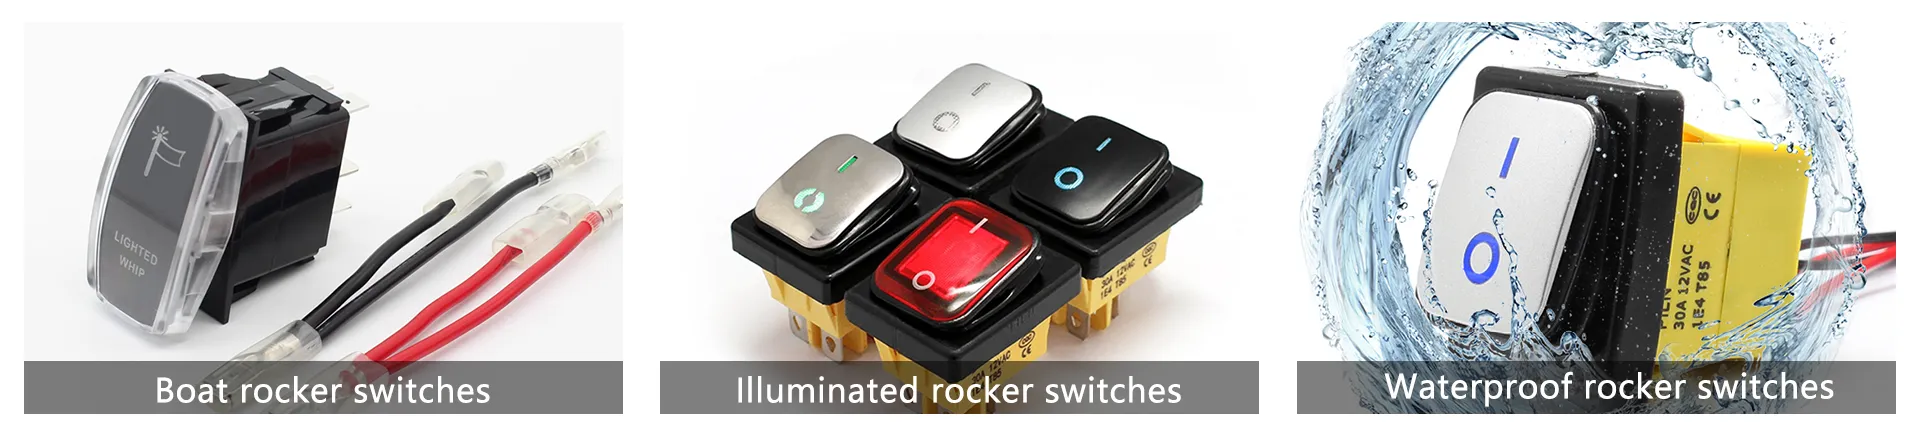 illuminated rocker switch